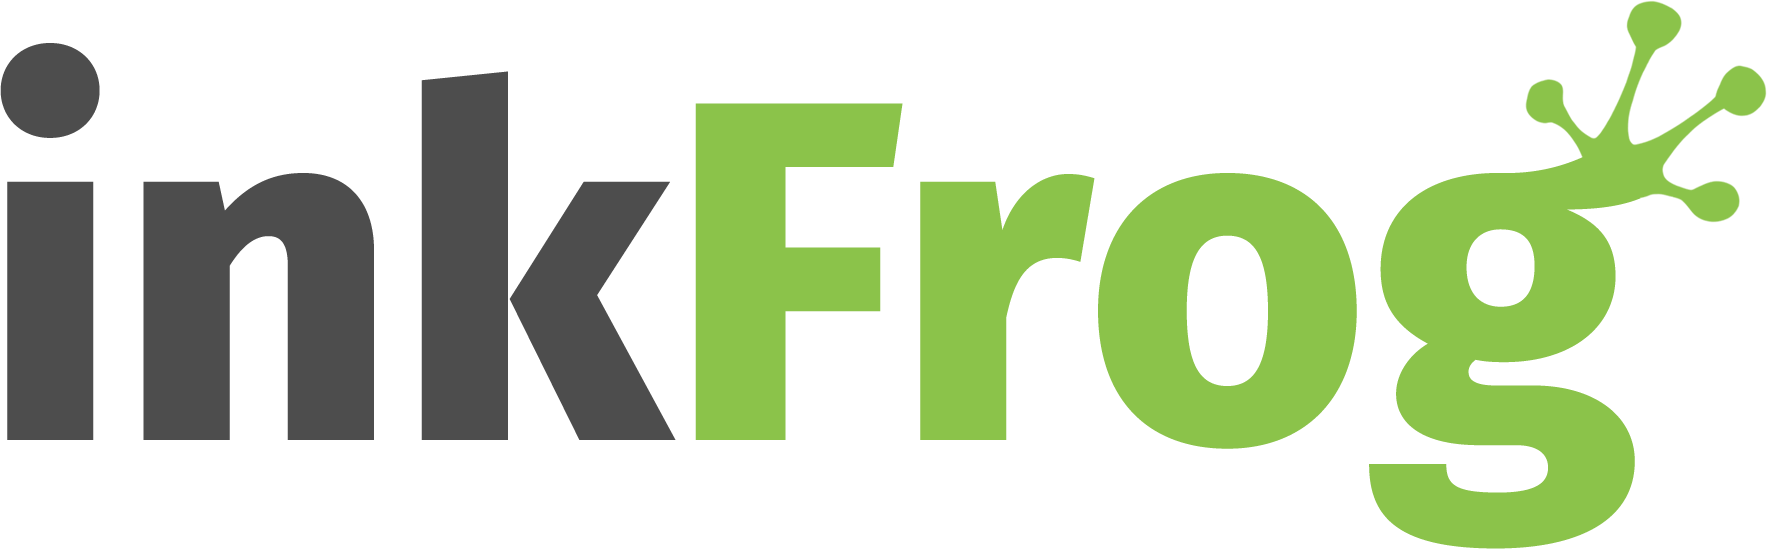 InkFrog logo